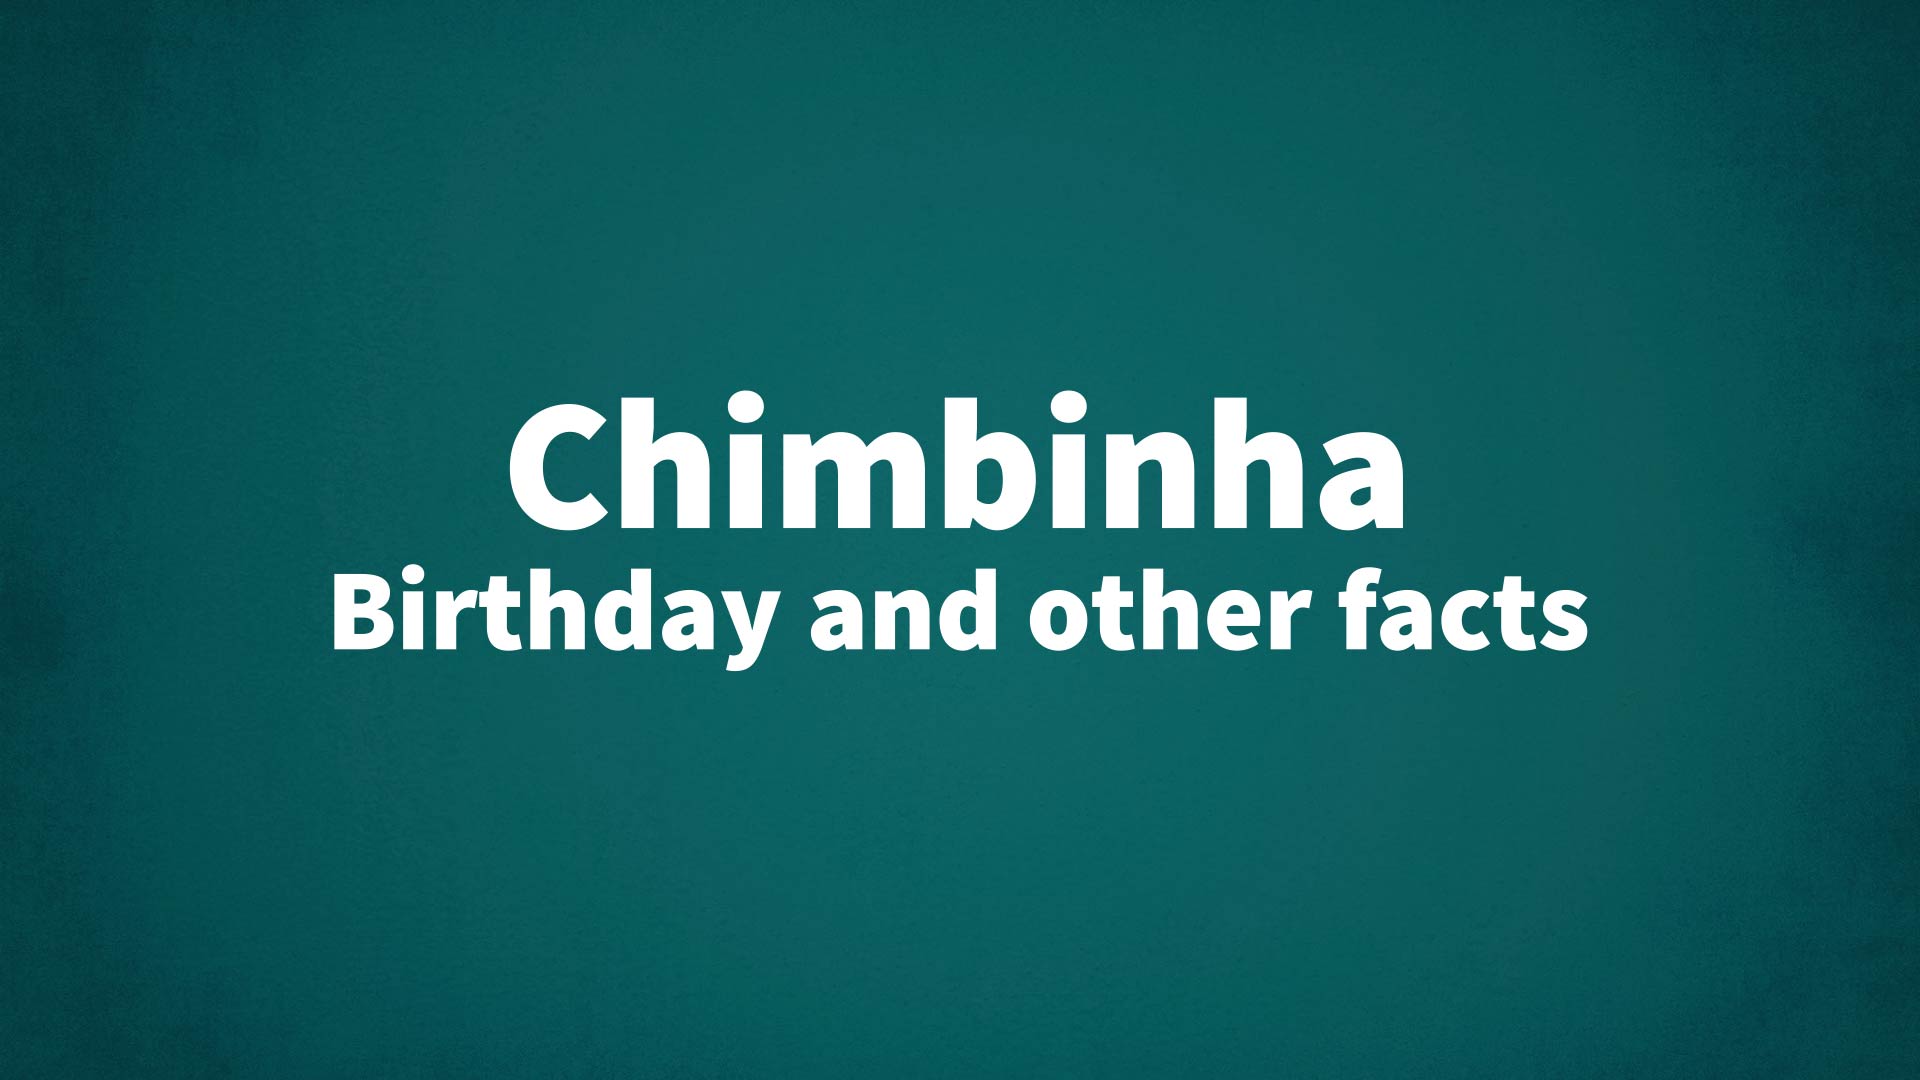 title image for Chimbinha birthday